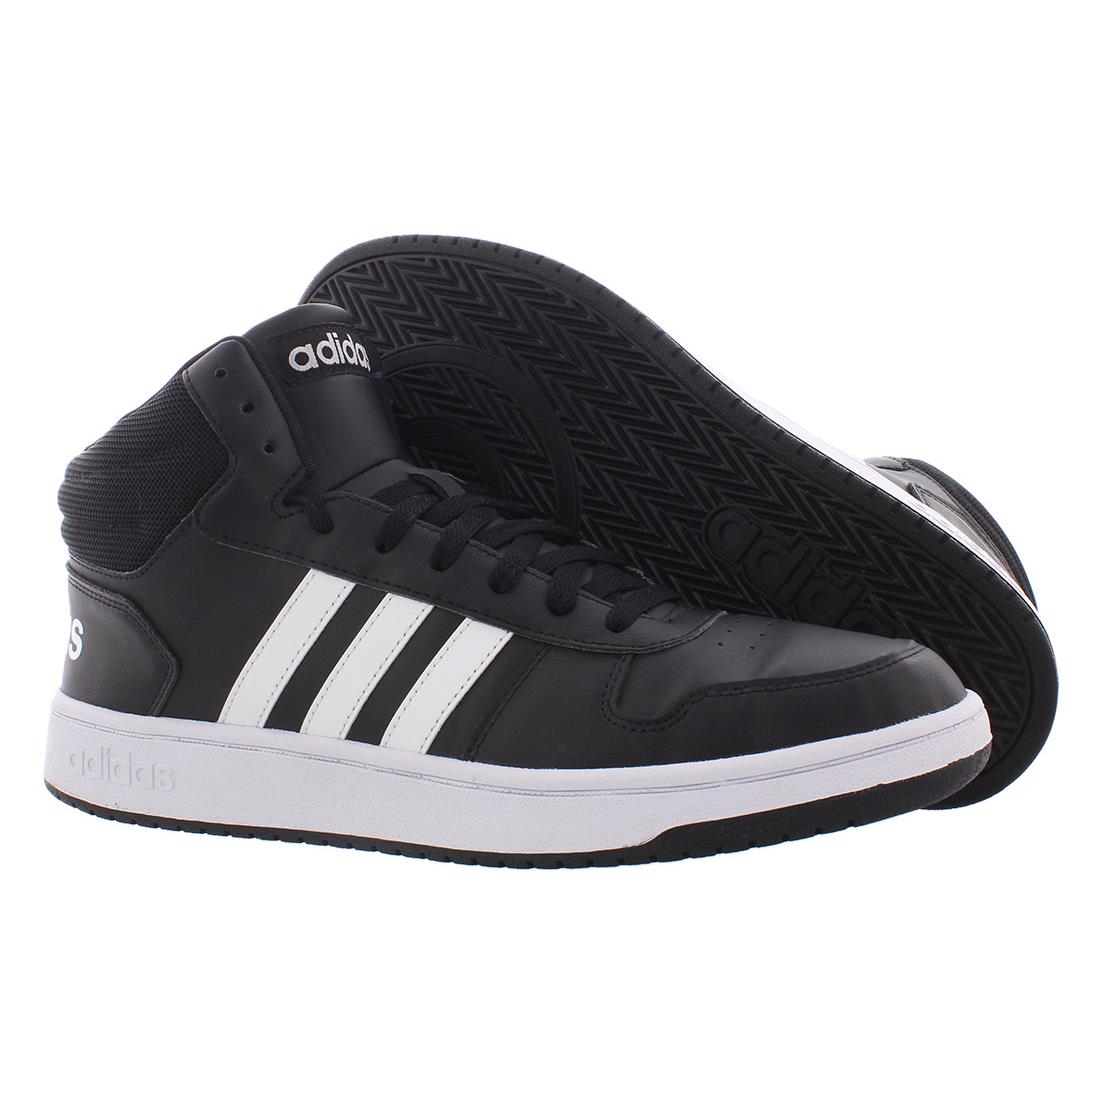 Adidas Hoops 2.0 Mid Mens Shoes Size 12 Color: Black/white - Black/White , Black Main